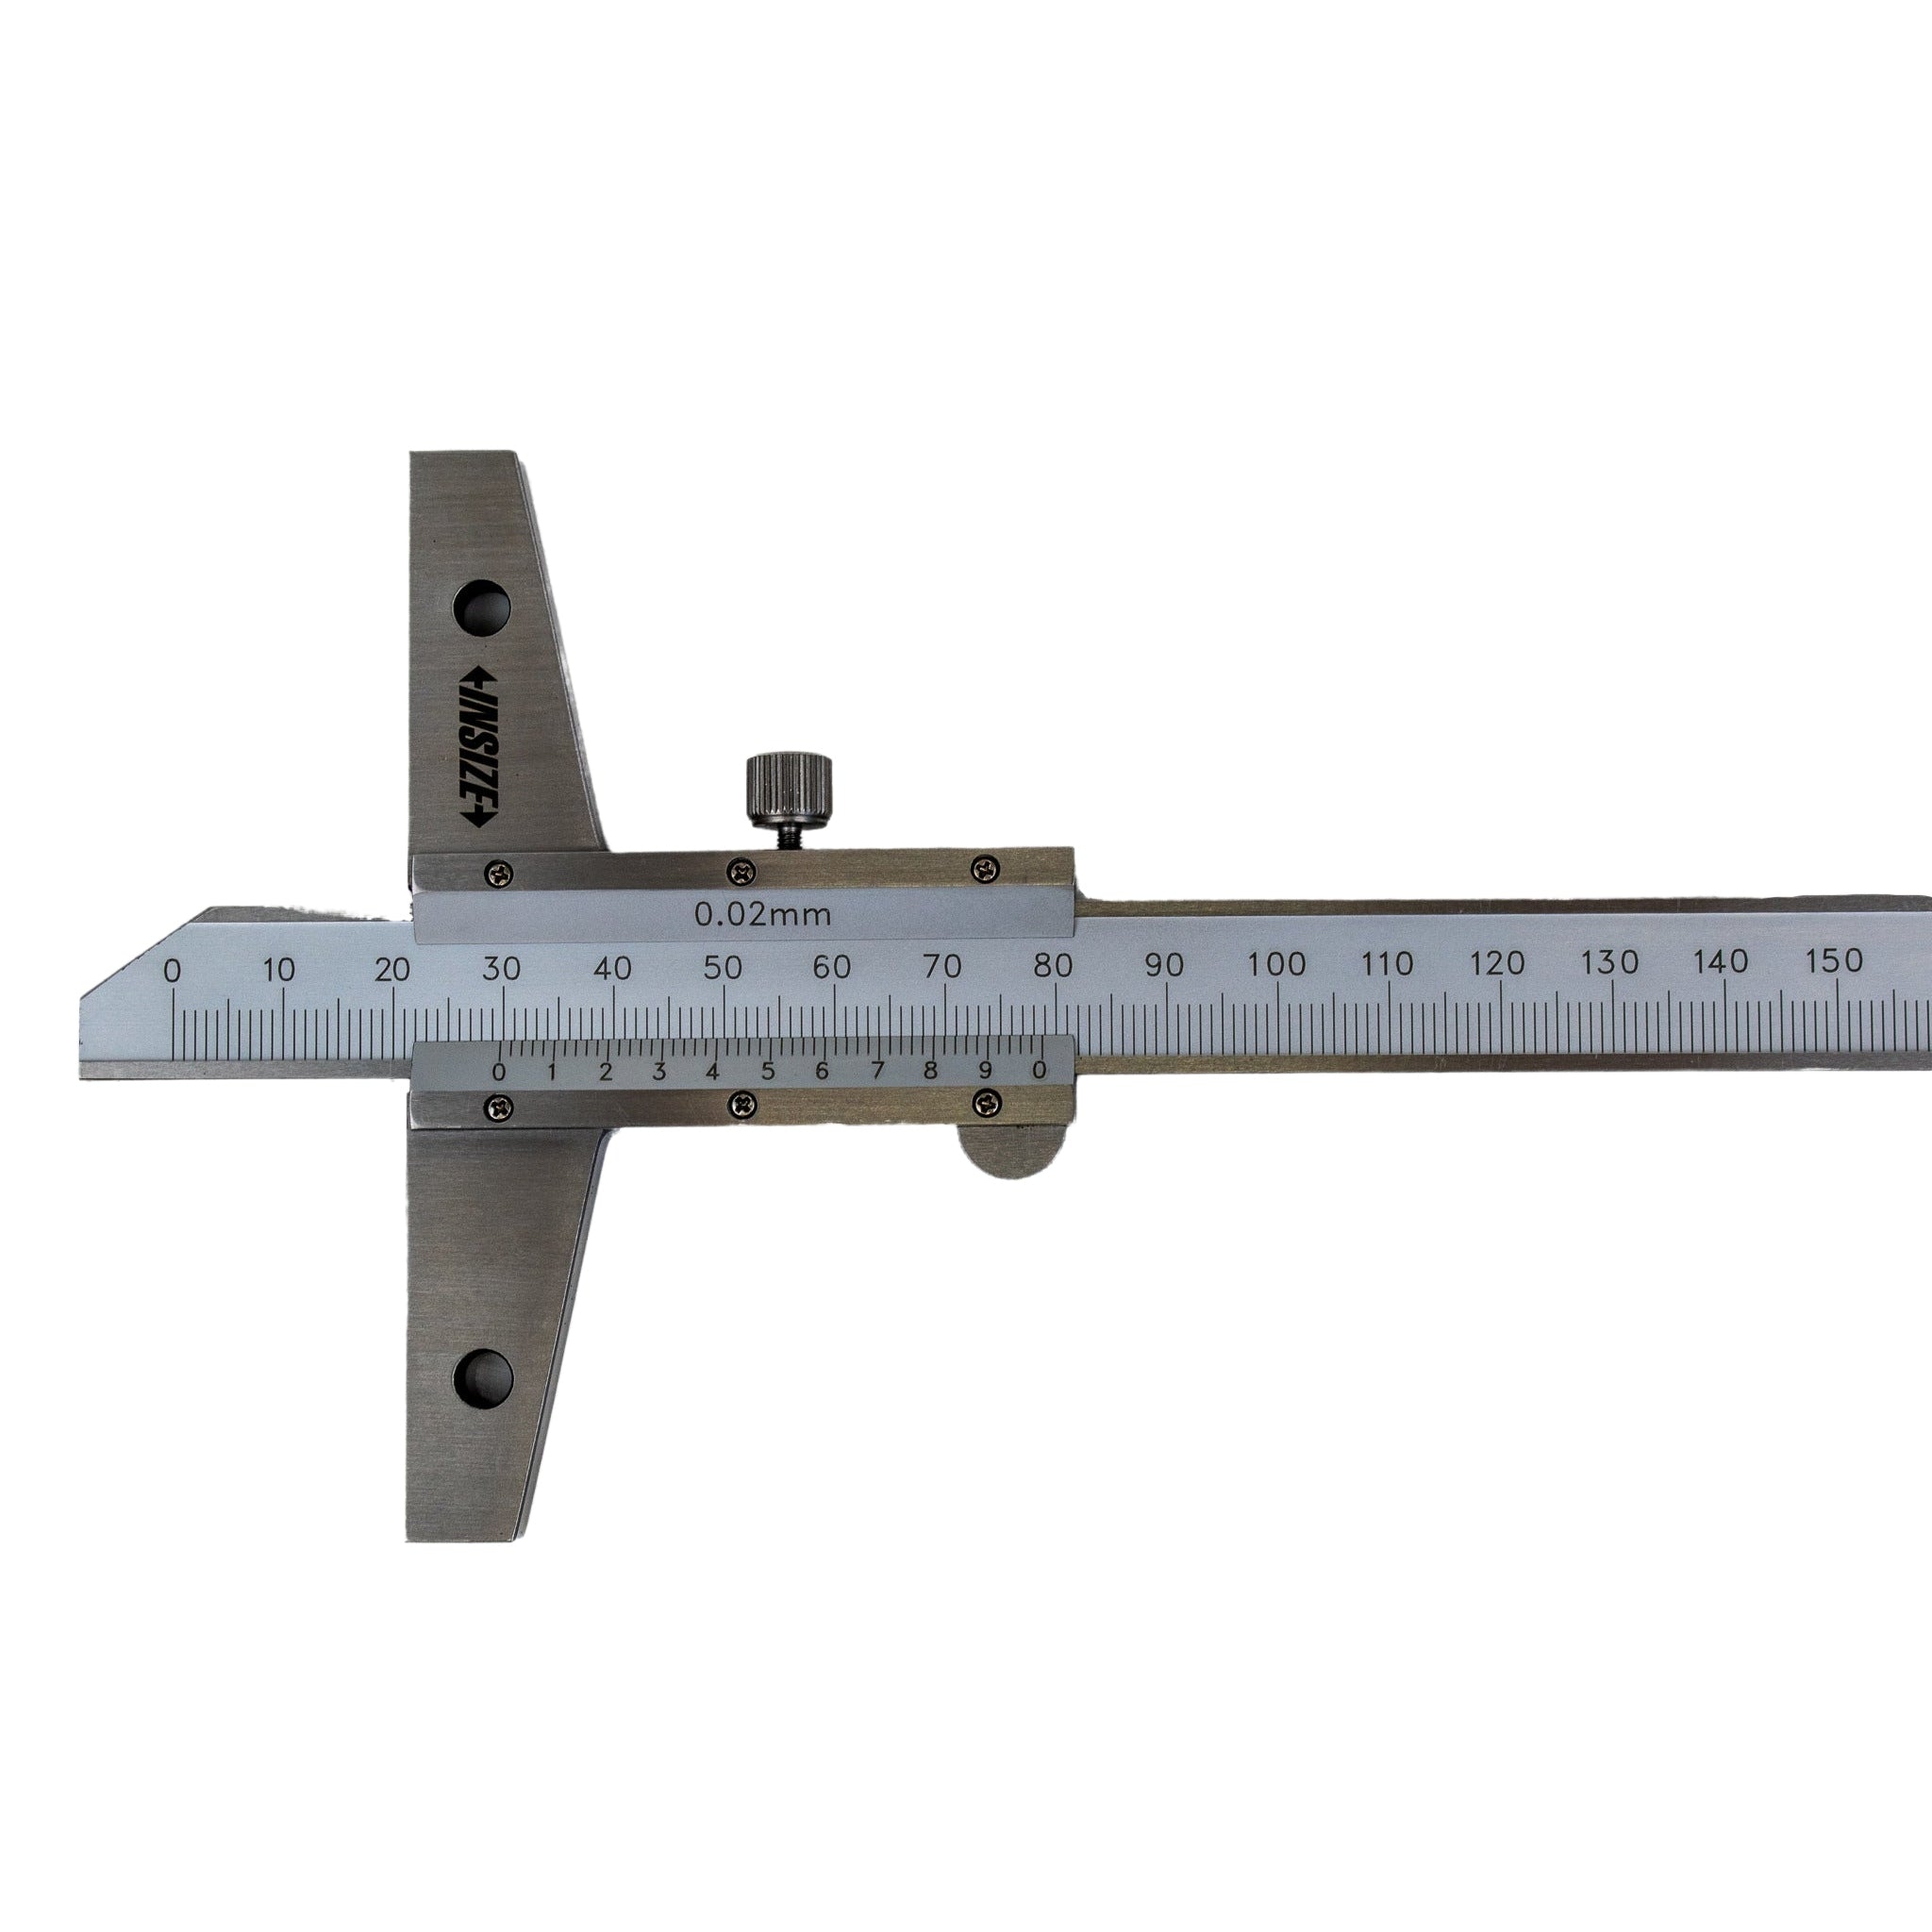 Insize Vernier Depth Gauge 0-150mm Range Series 1247-1501